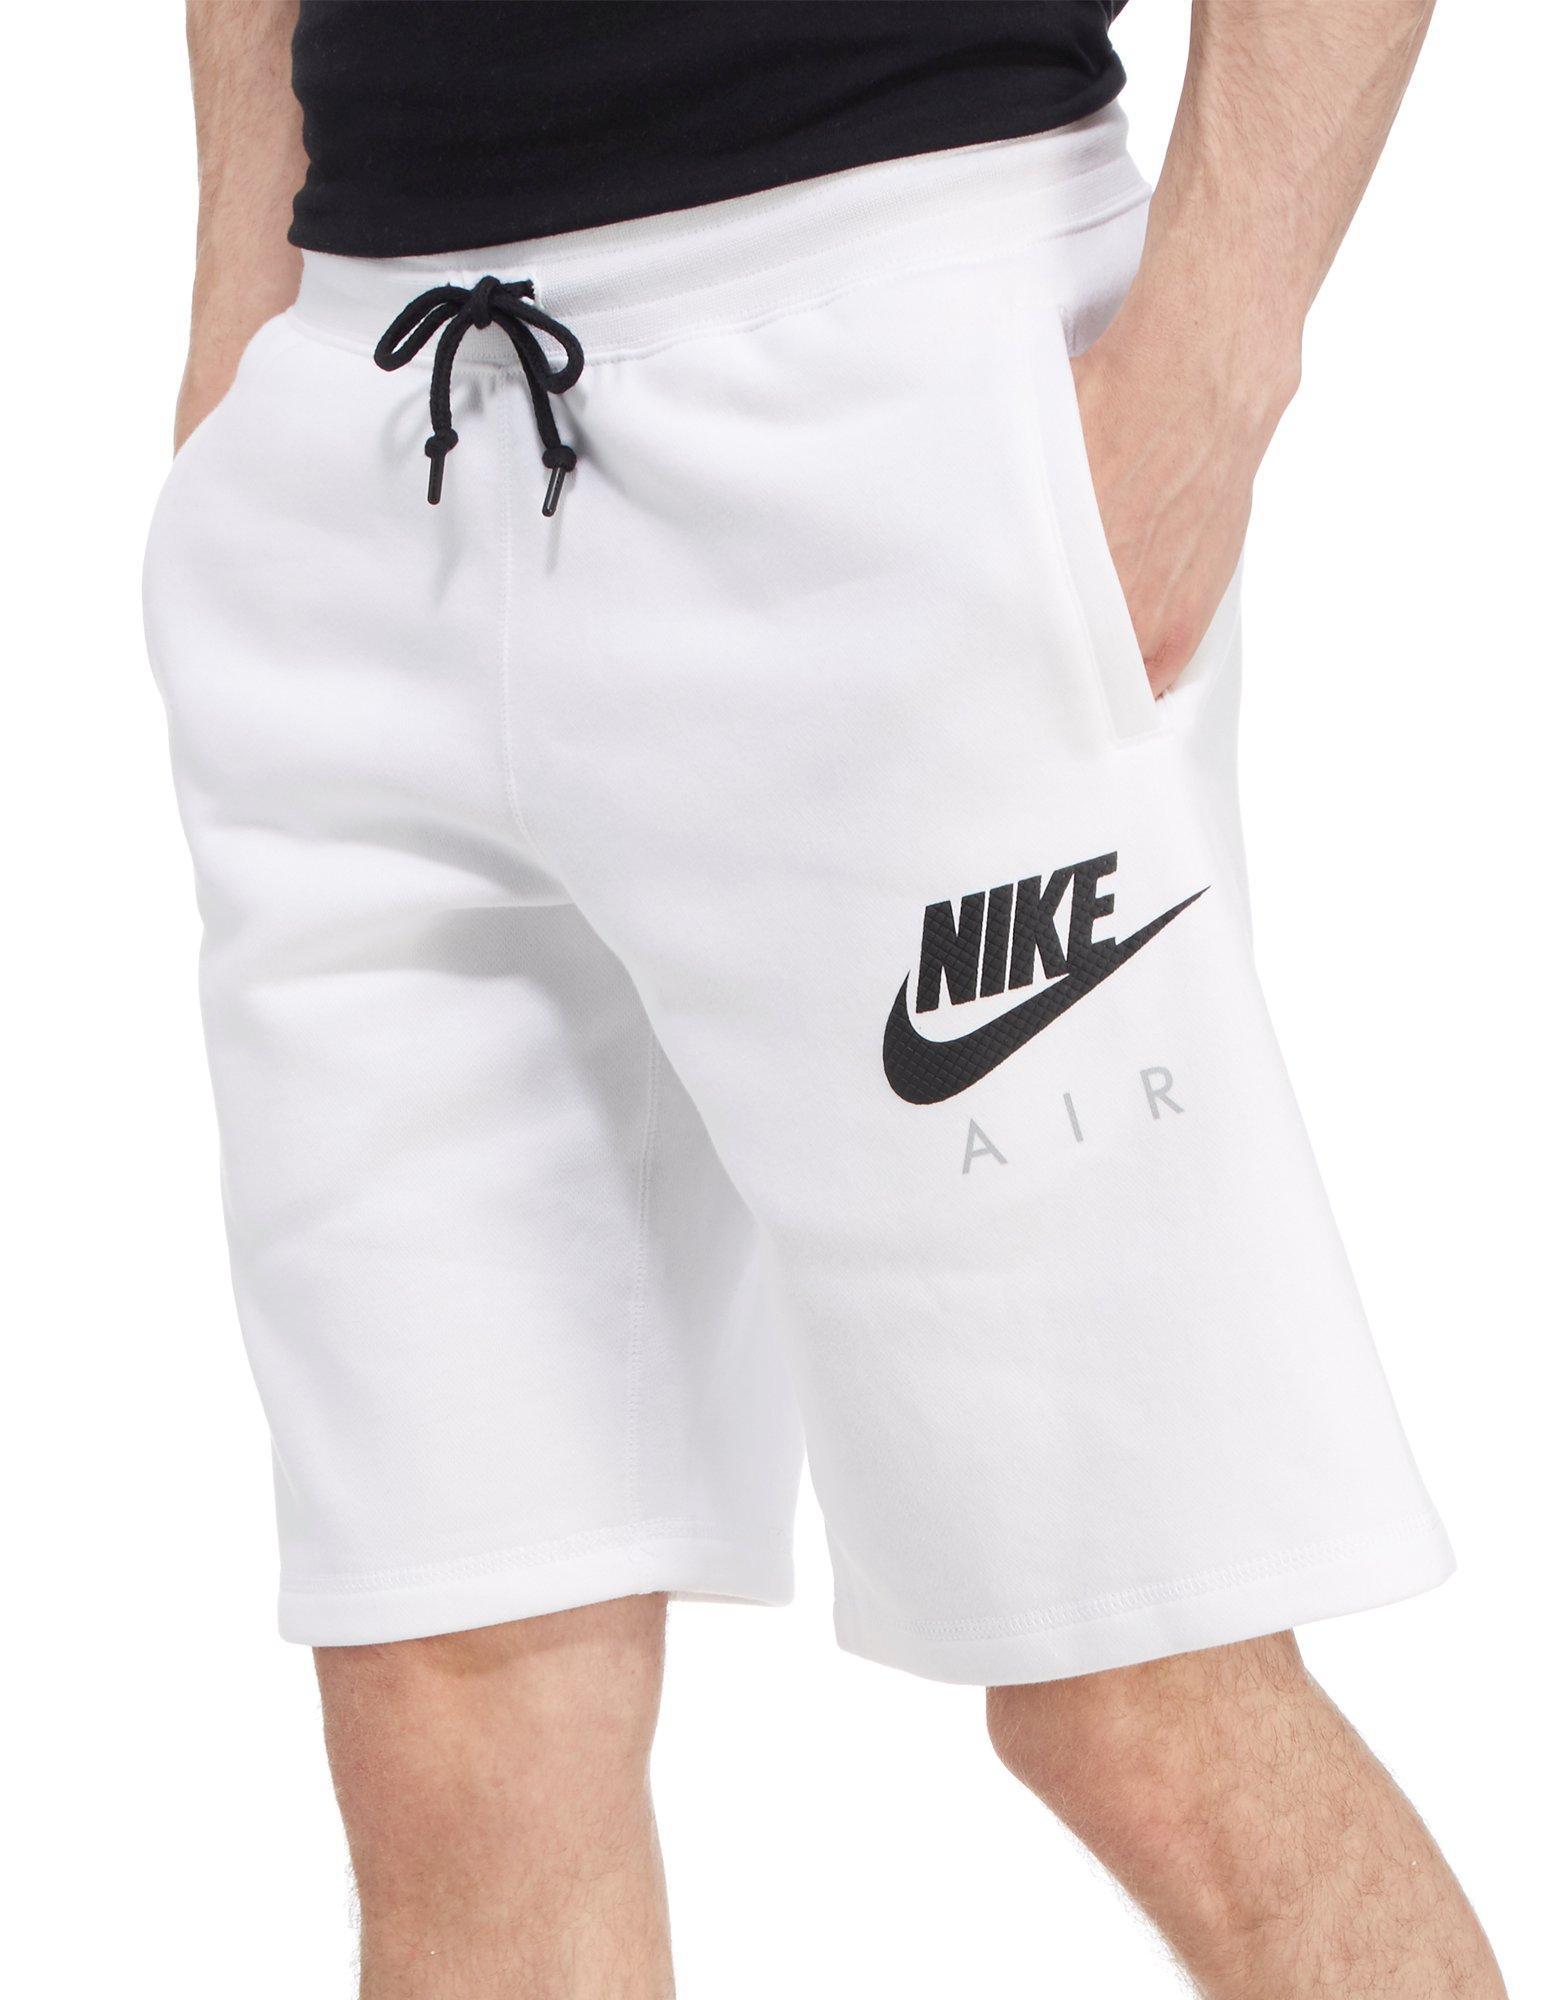 Buy > cheap nike fleece shorts > in stock